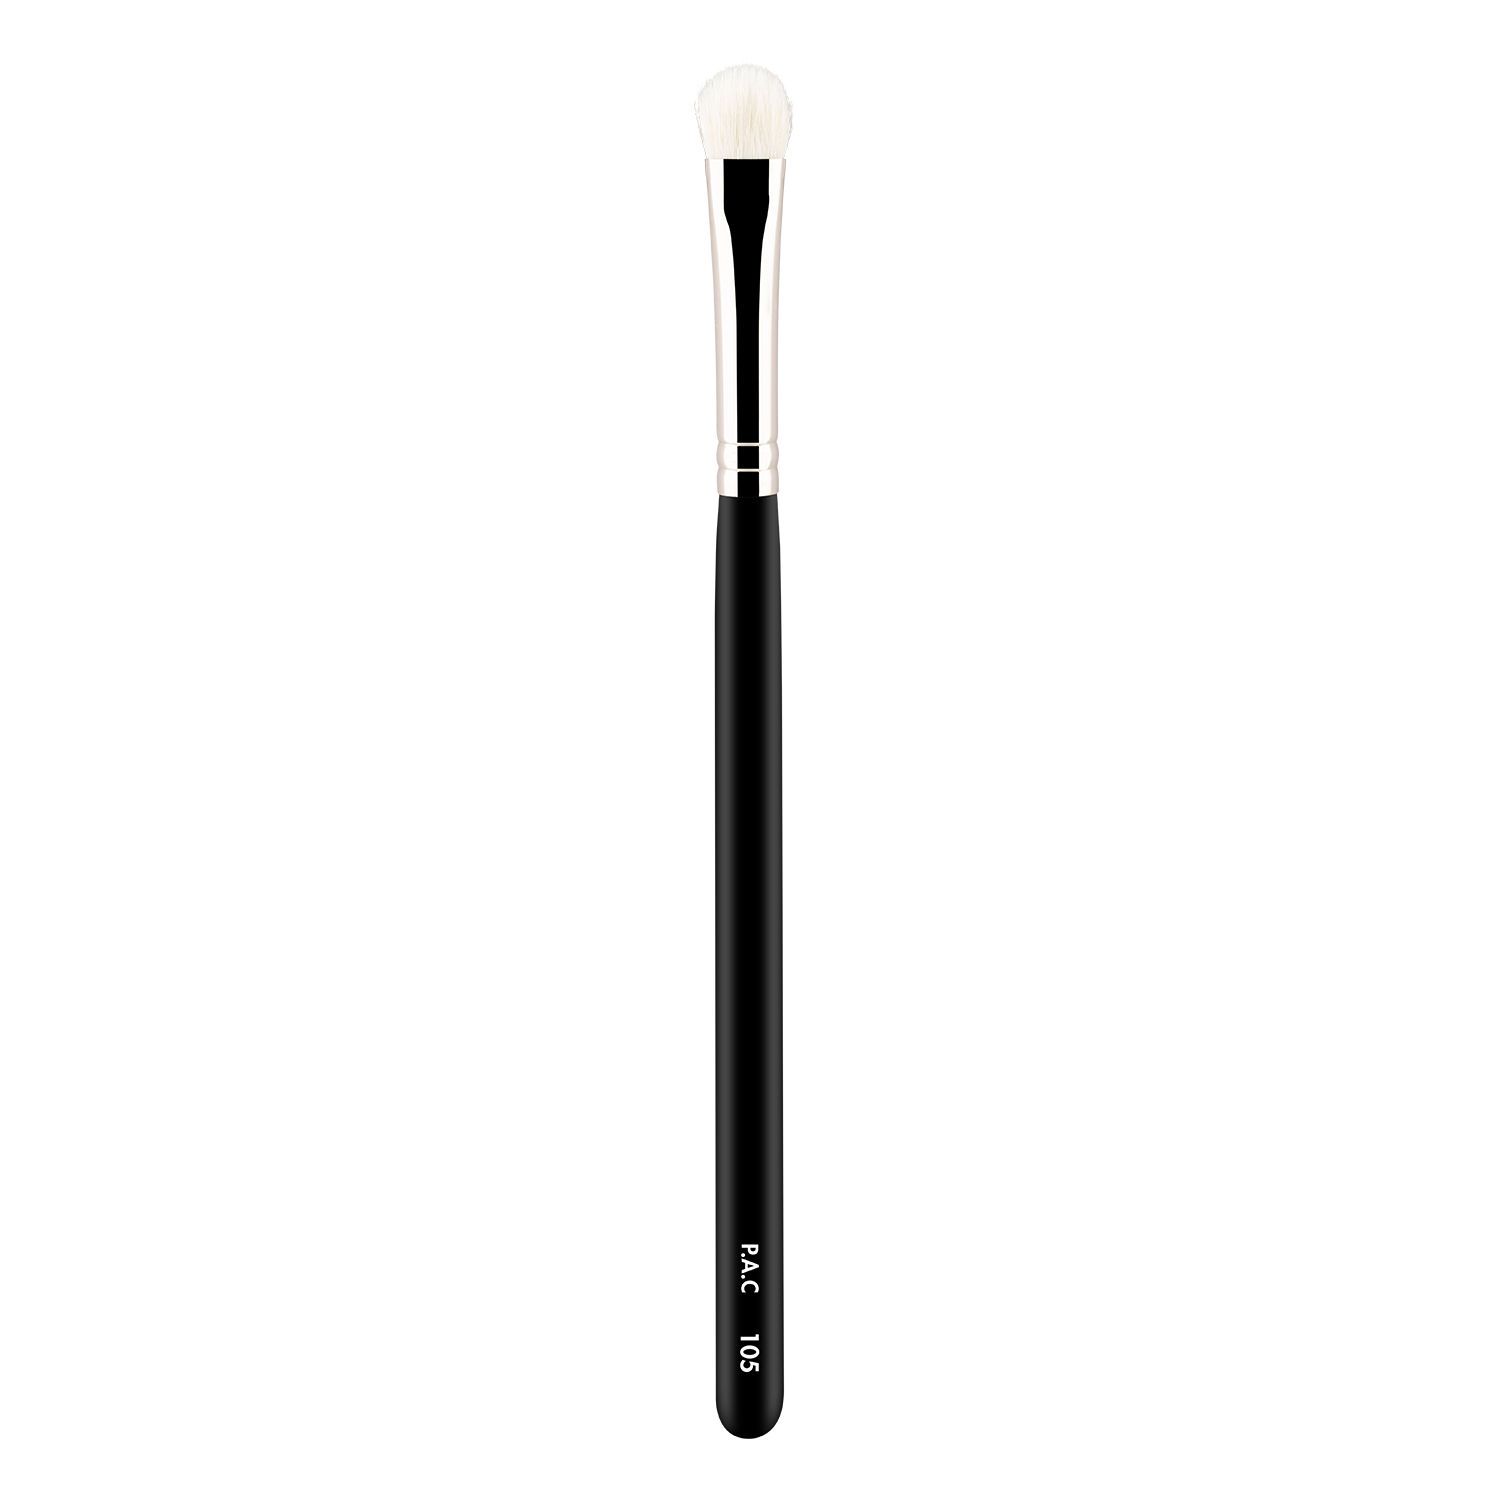 PAC Blending Eyeshadow Brush - 105